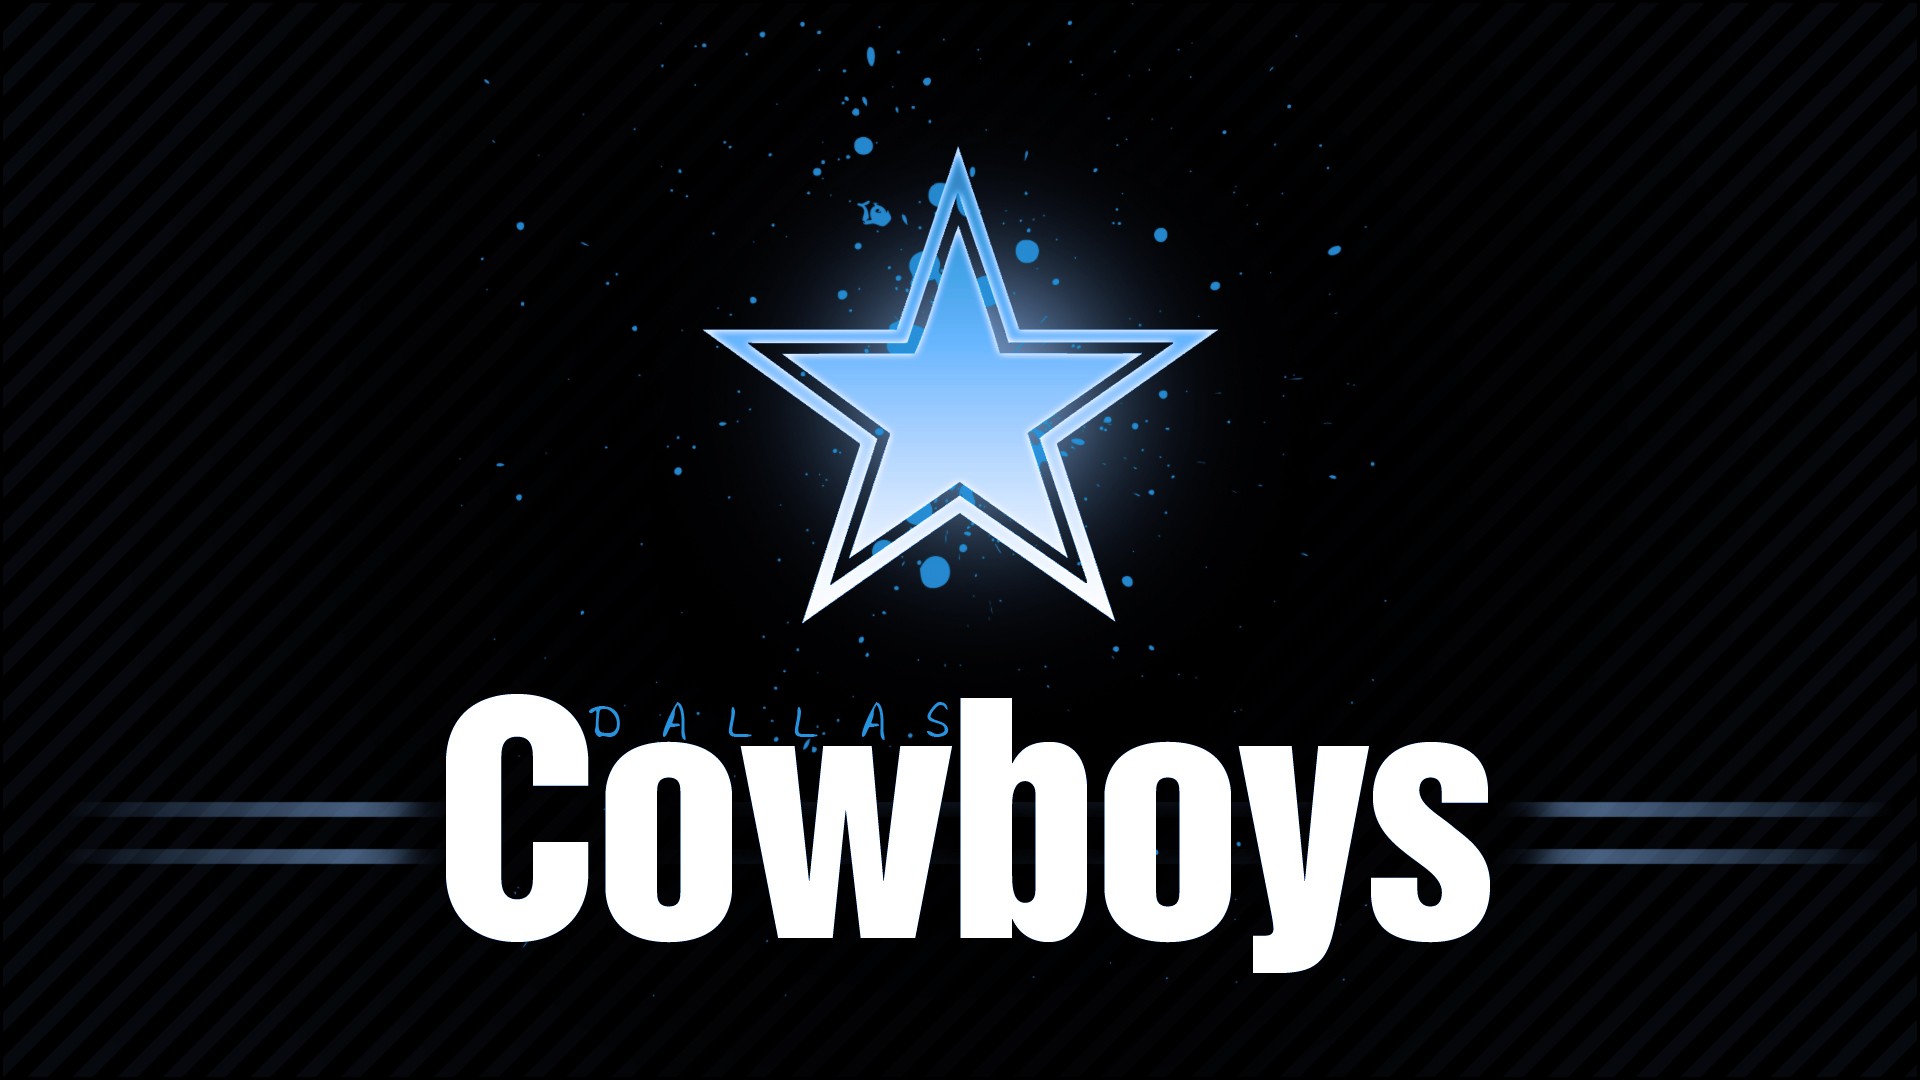 free cowboys wallpaper download,logo,text,font,graphics,graphic design